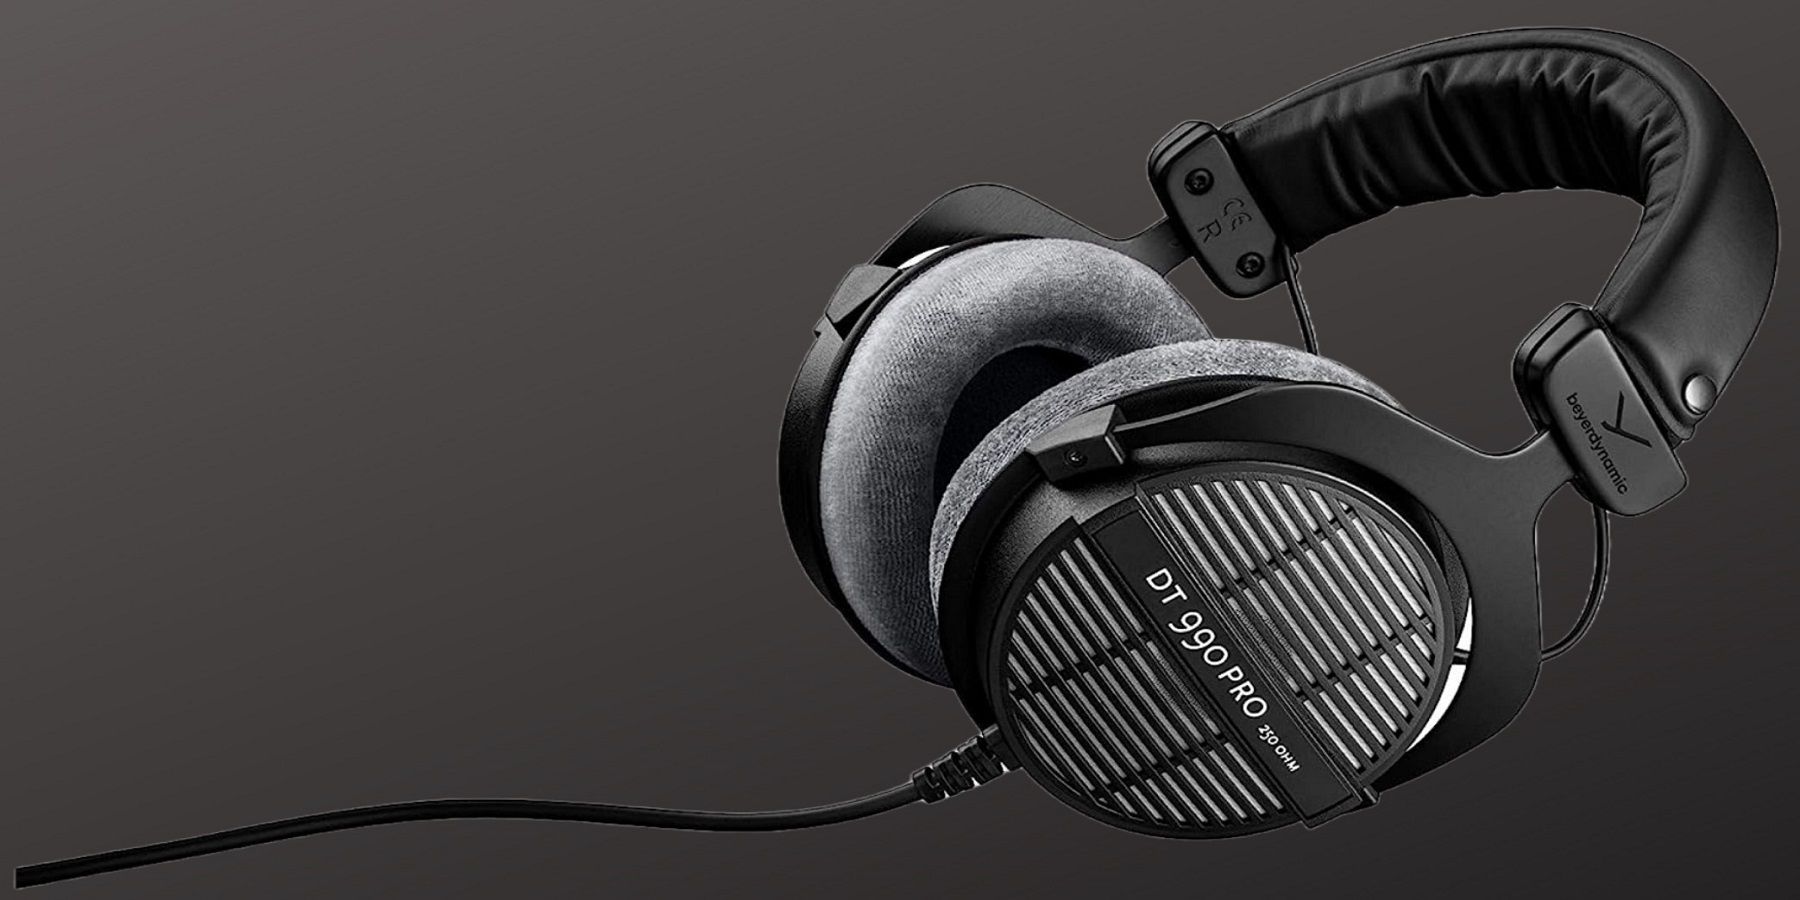 Beyerdynamic DT 990 PRO Studio Headphones